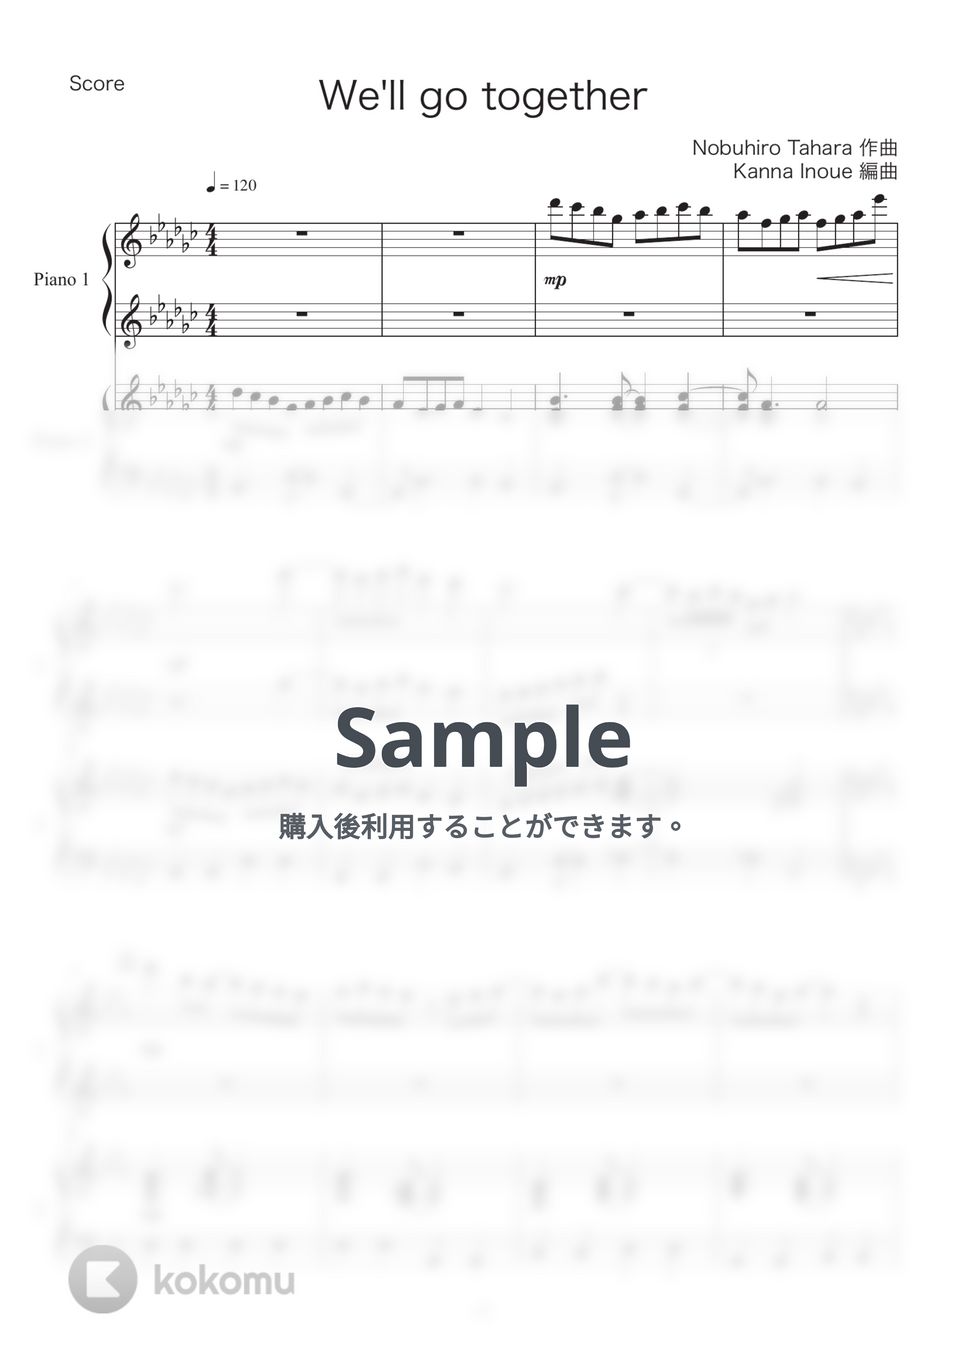 Snow Man - We'll go together (ピアノ連弾 / 『先生さようなら』主題歌) by Kanna Inoue